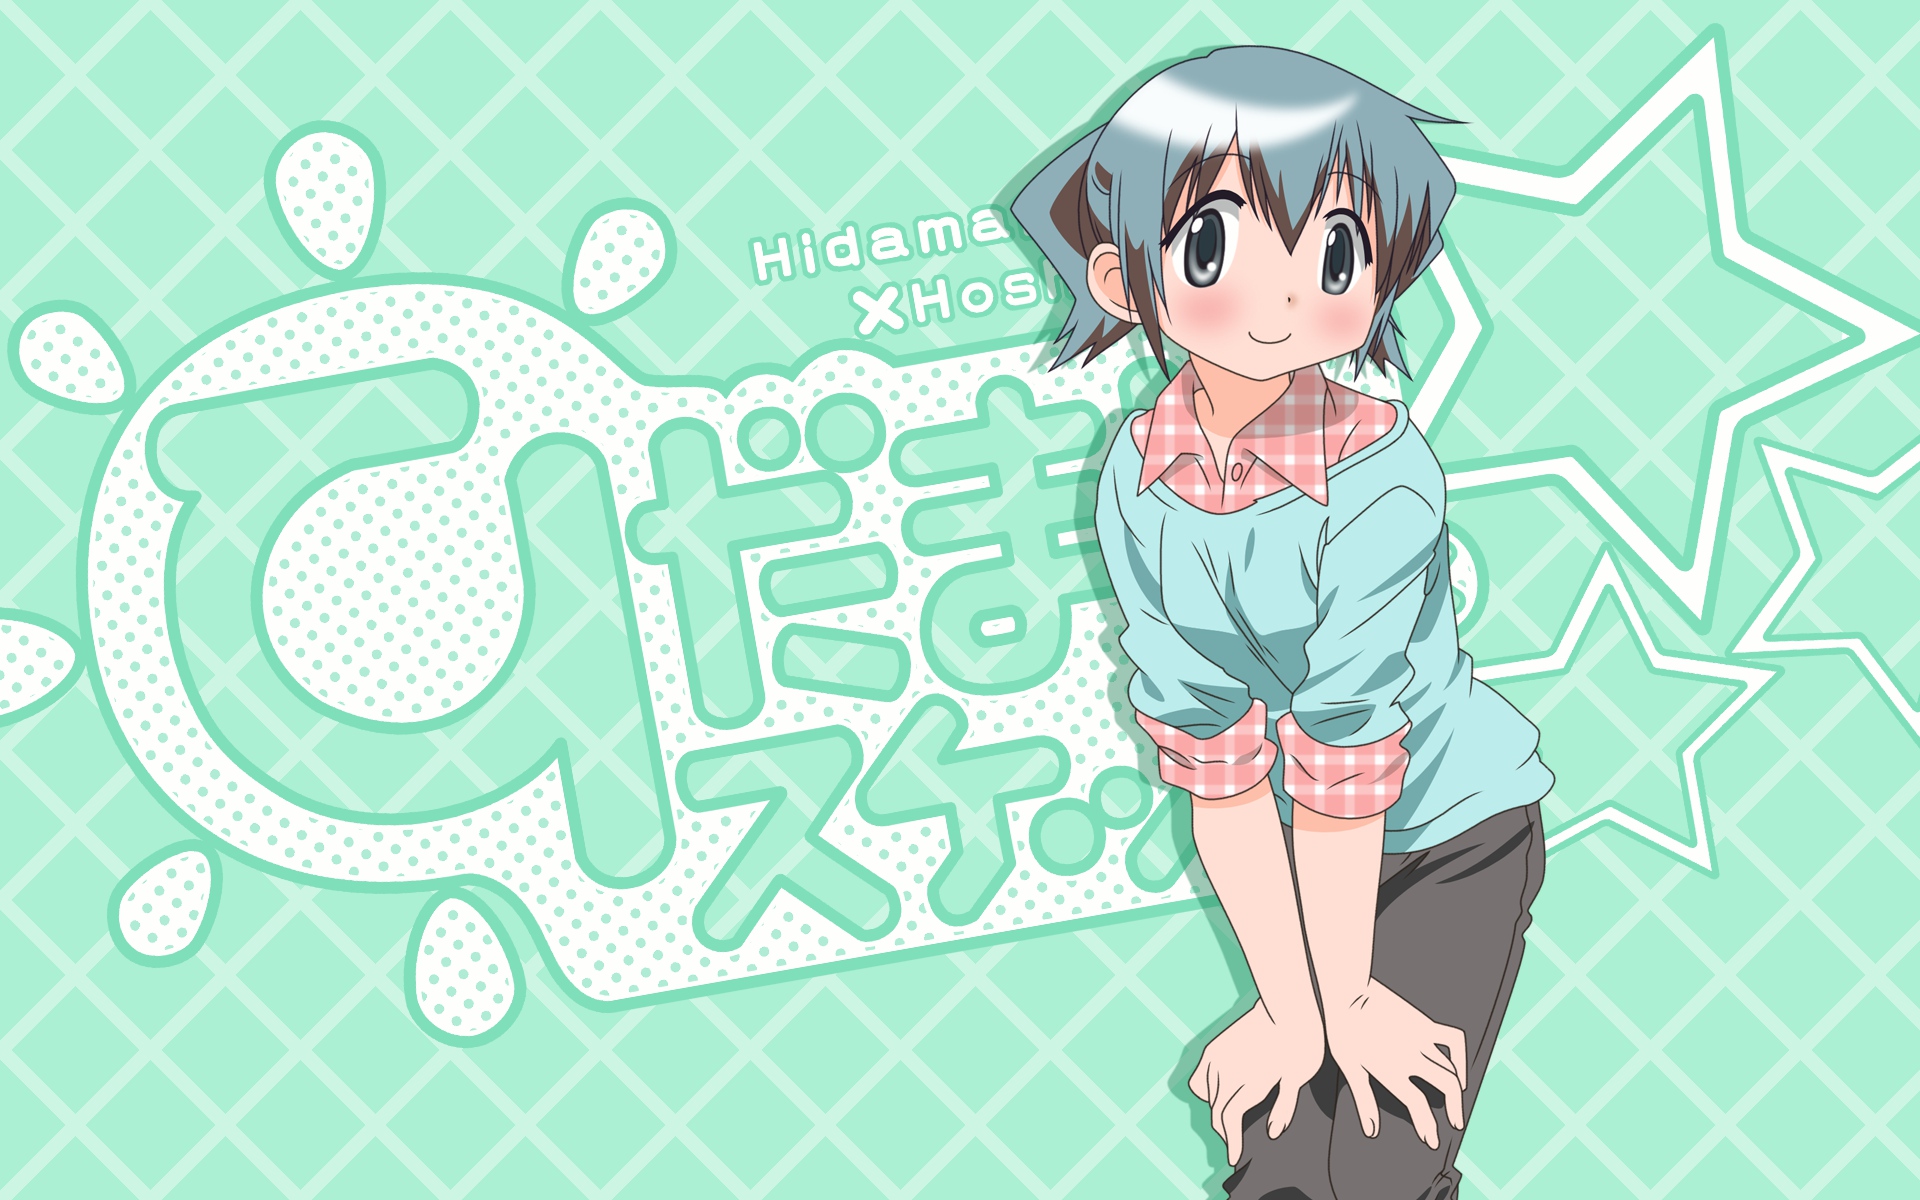 Hidamari Sketch anime desktop wallpaper